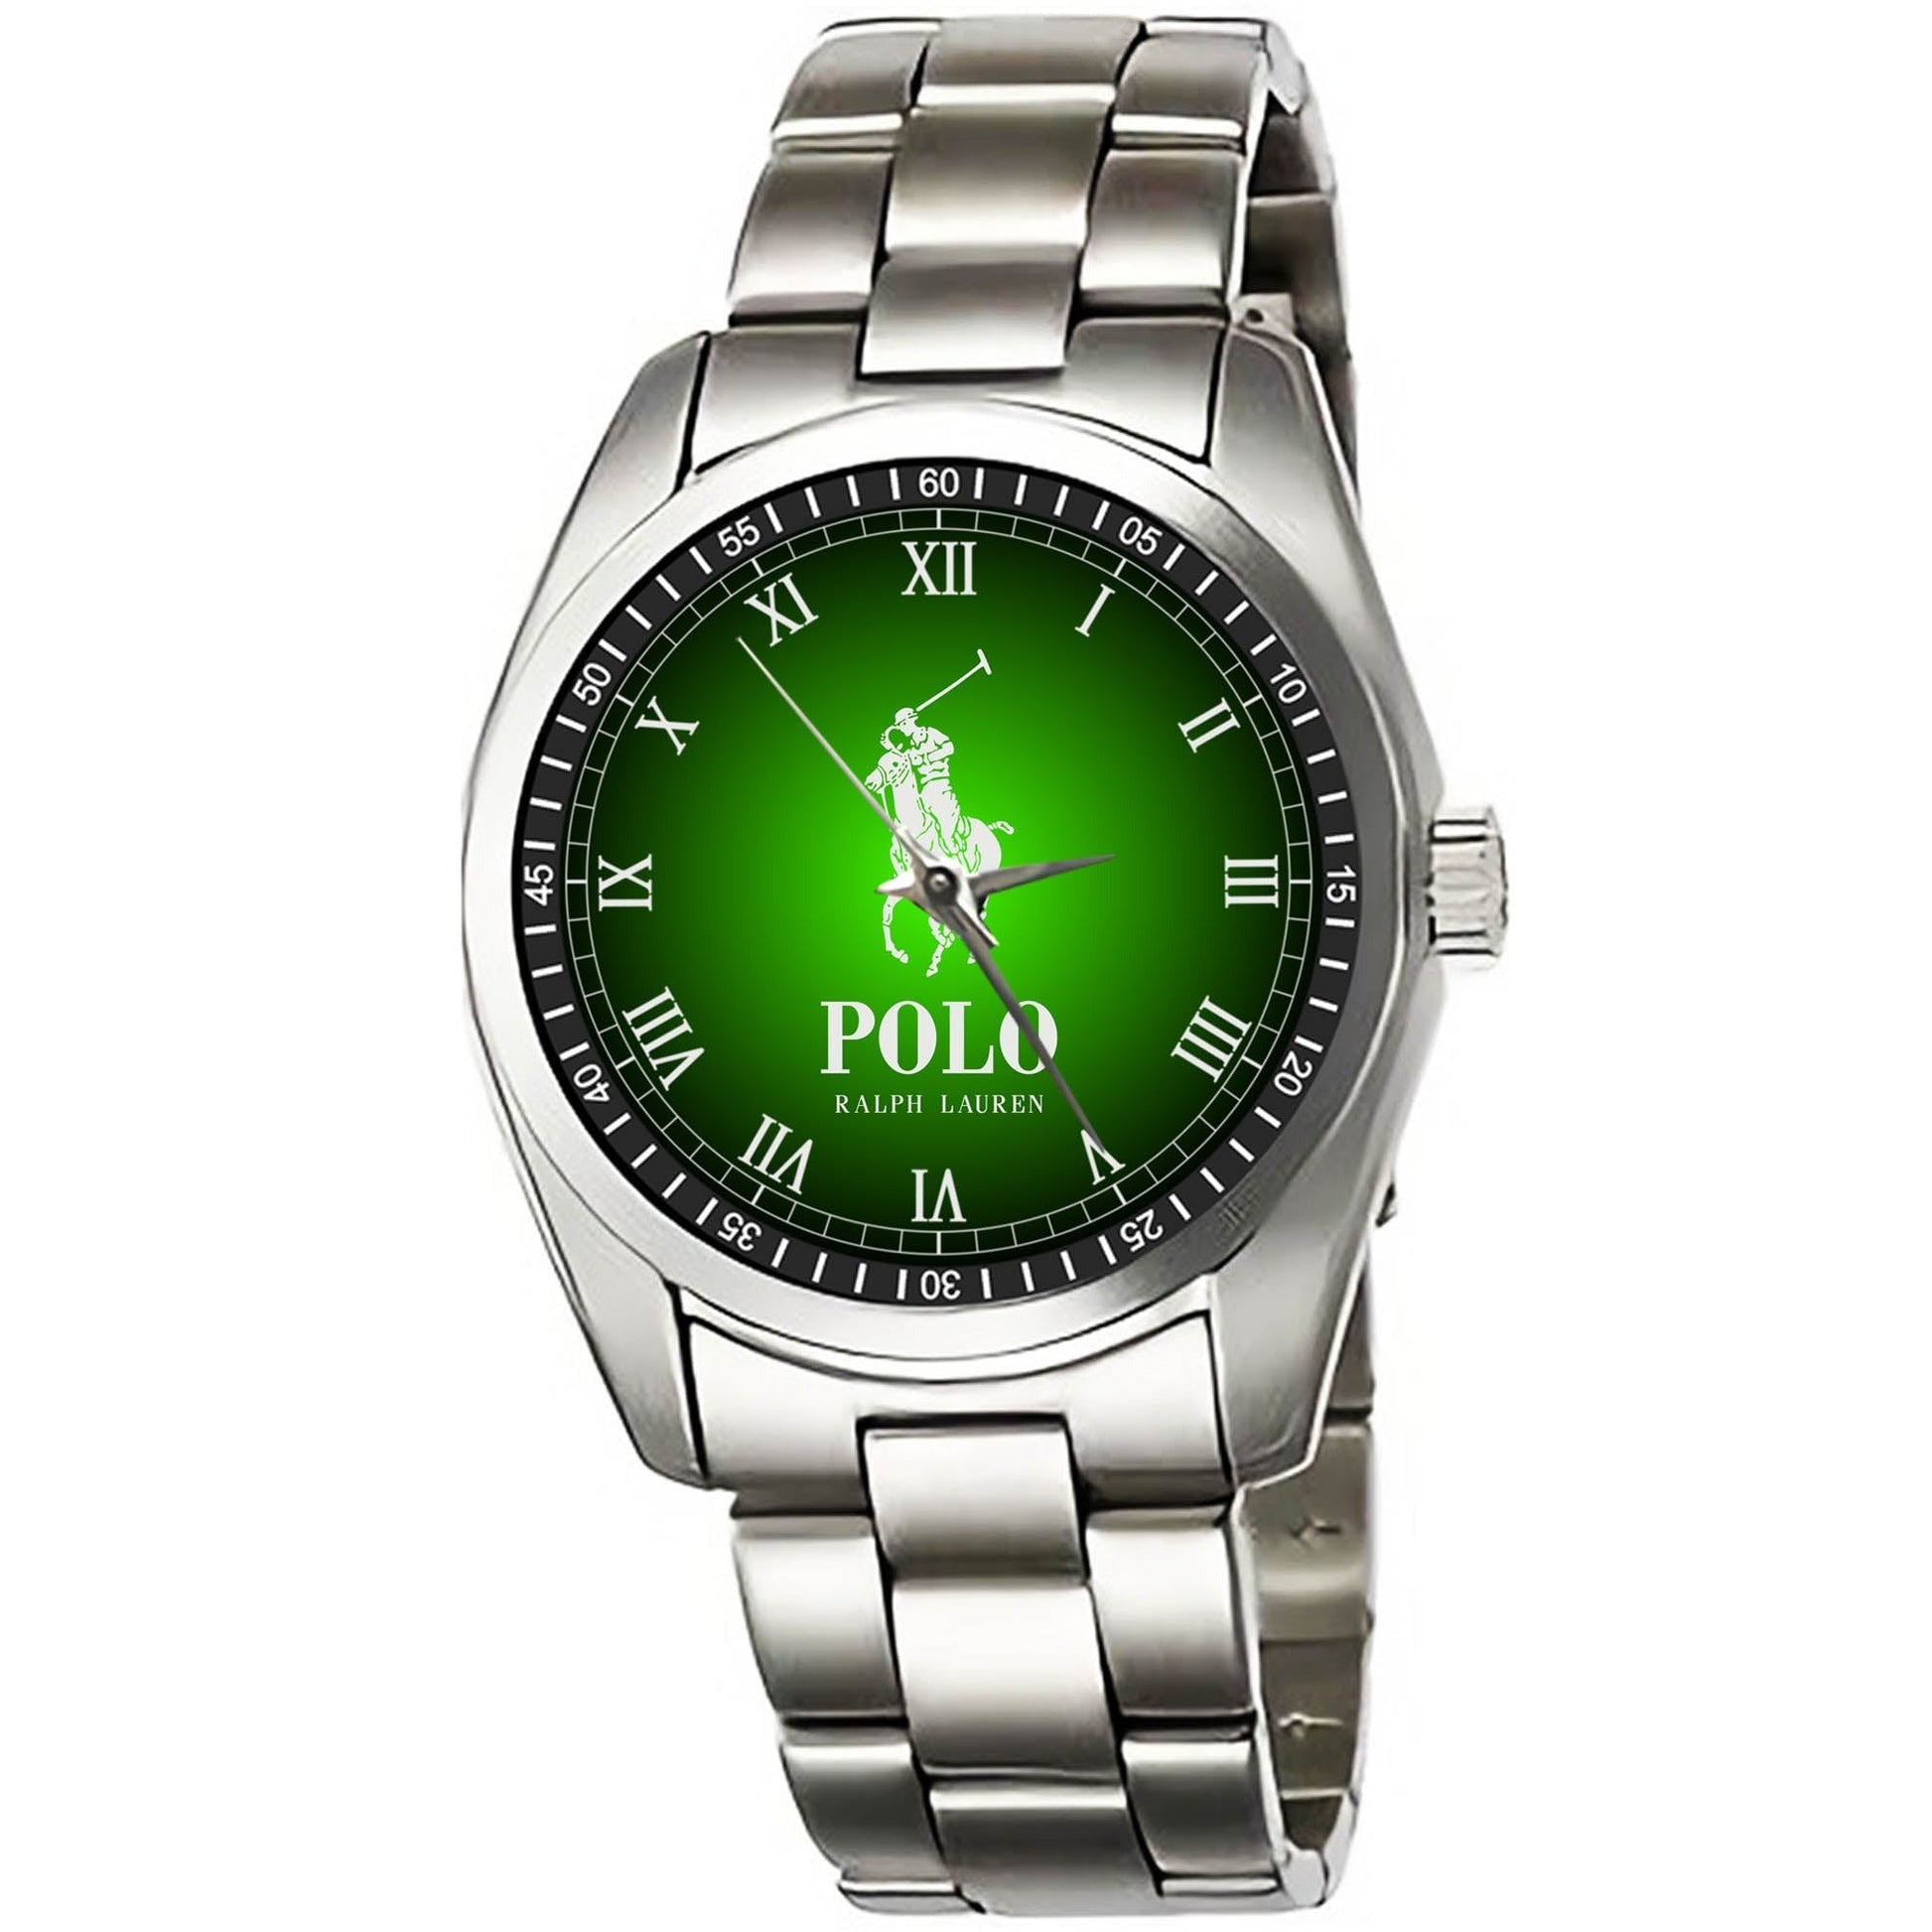 Polo Ralph Lauren Watches KP620